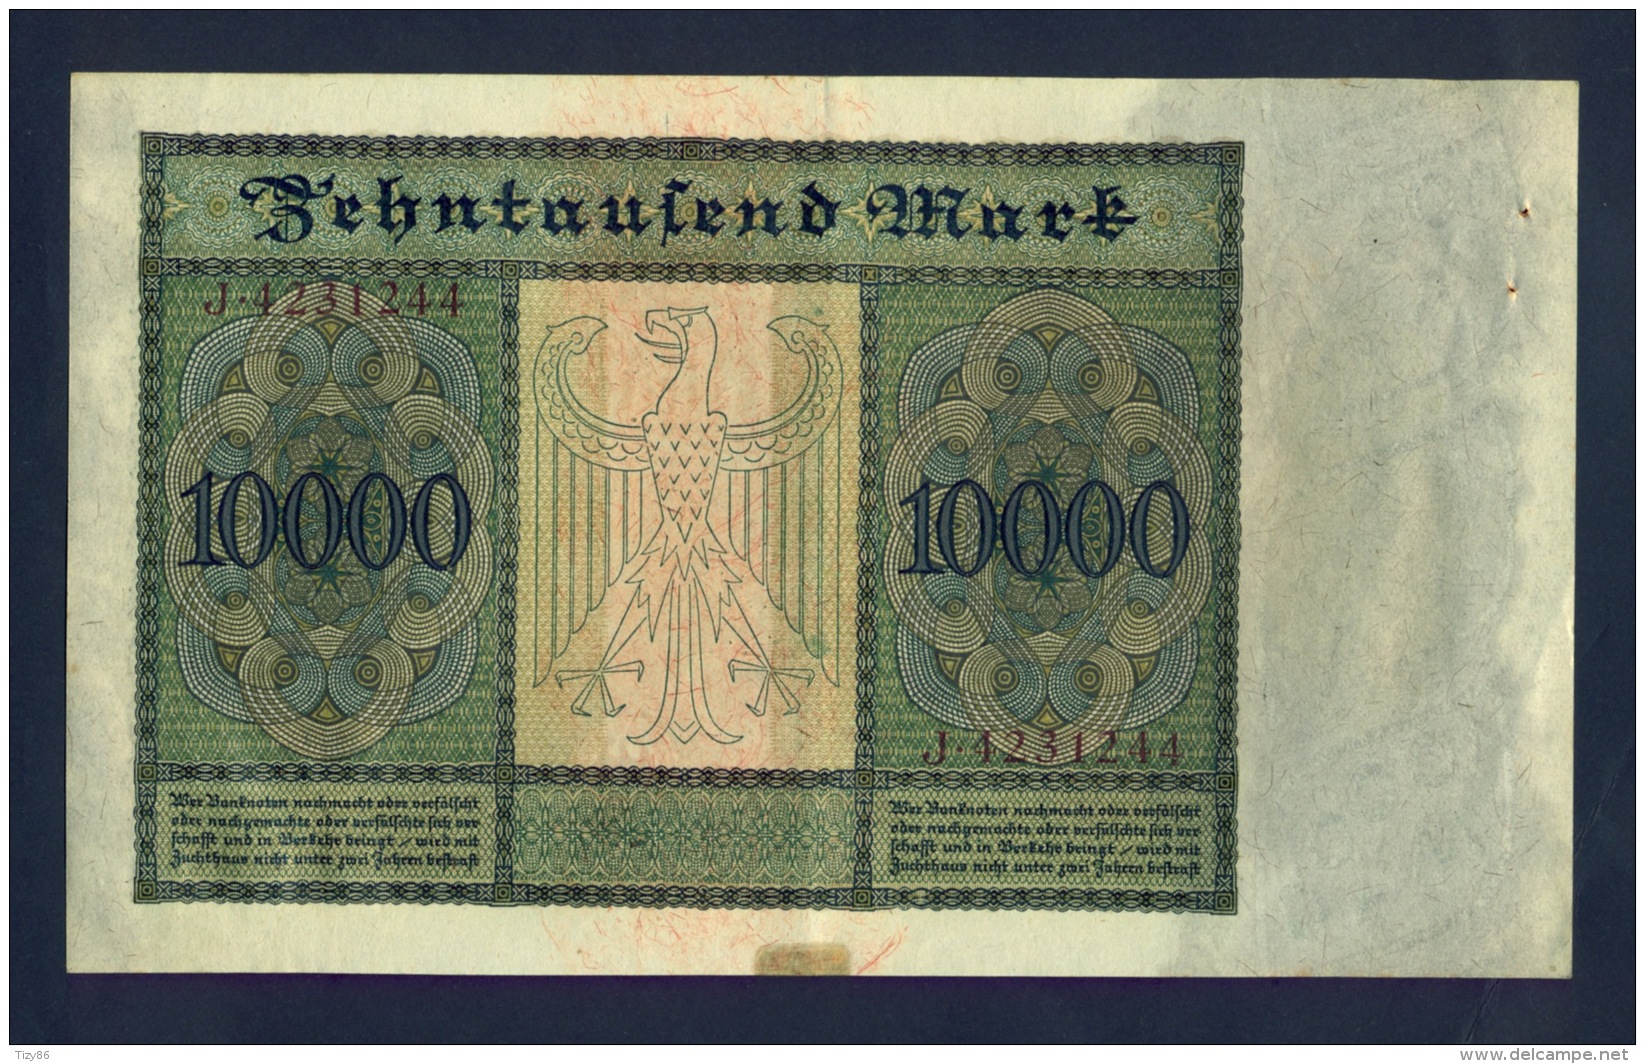 Banconota Germania 10.000 Mark 19/1/1922 - Te Identificeren